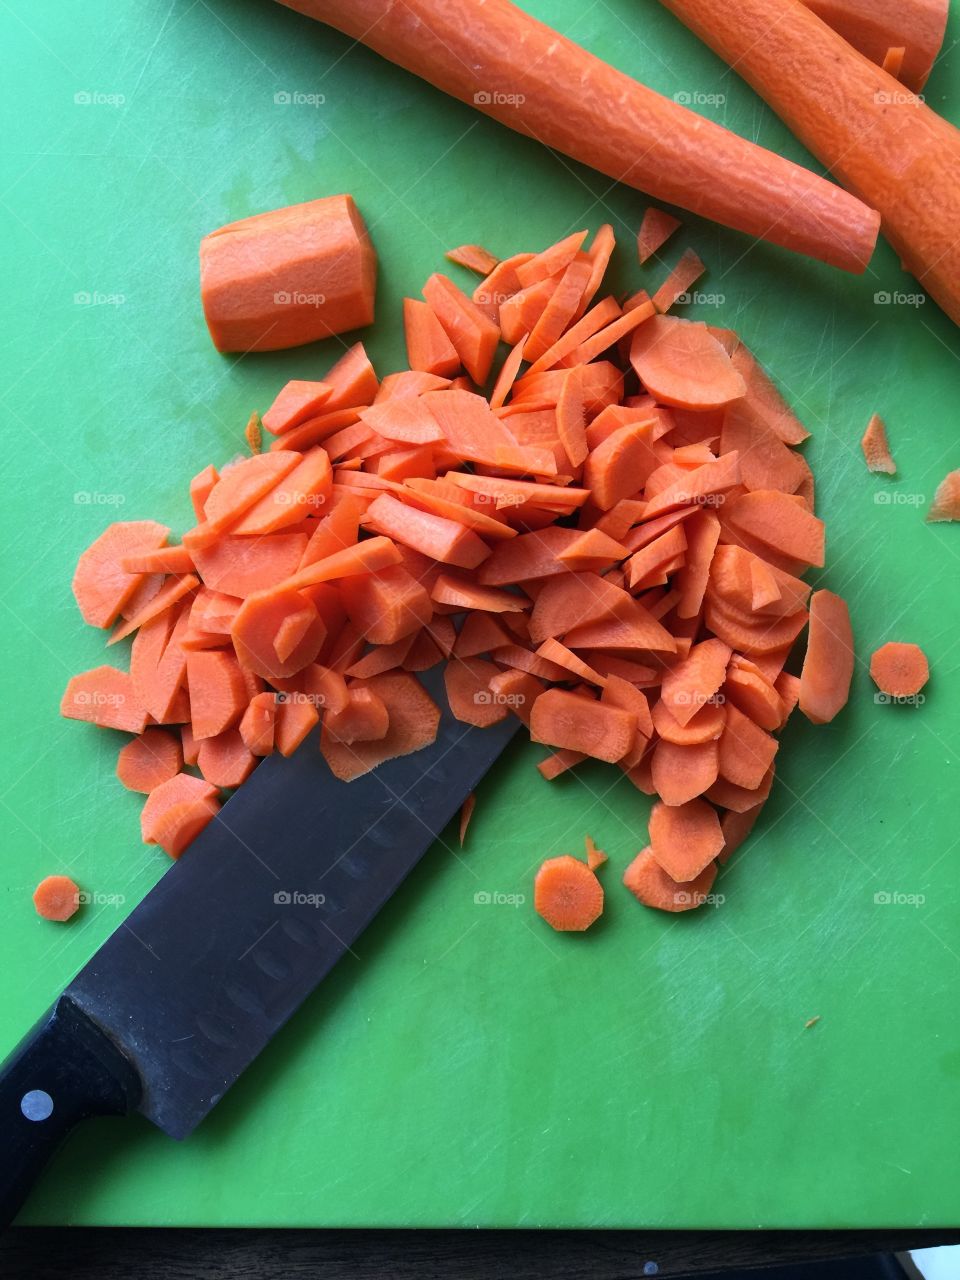 Chopping carrots